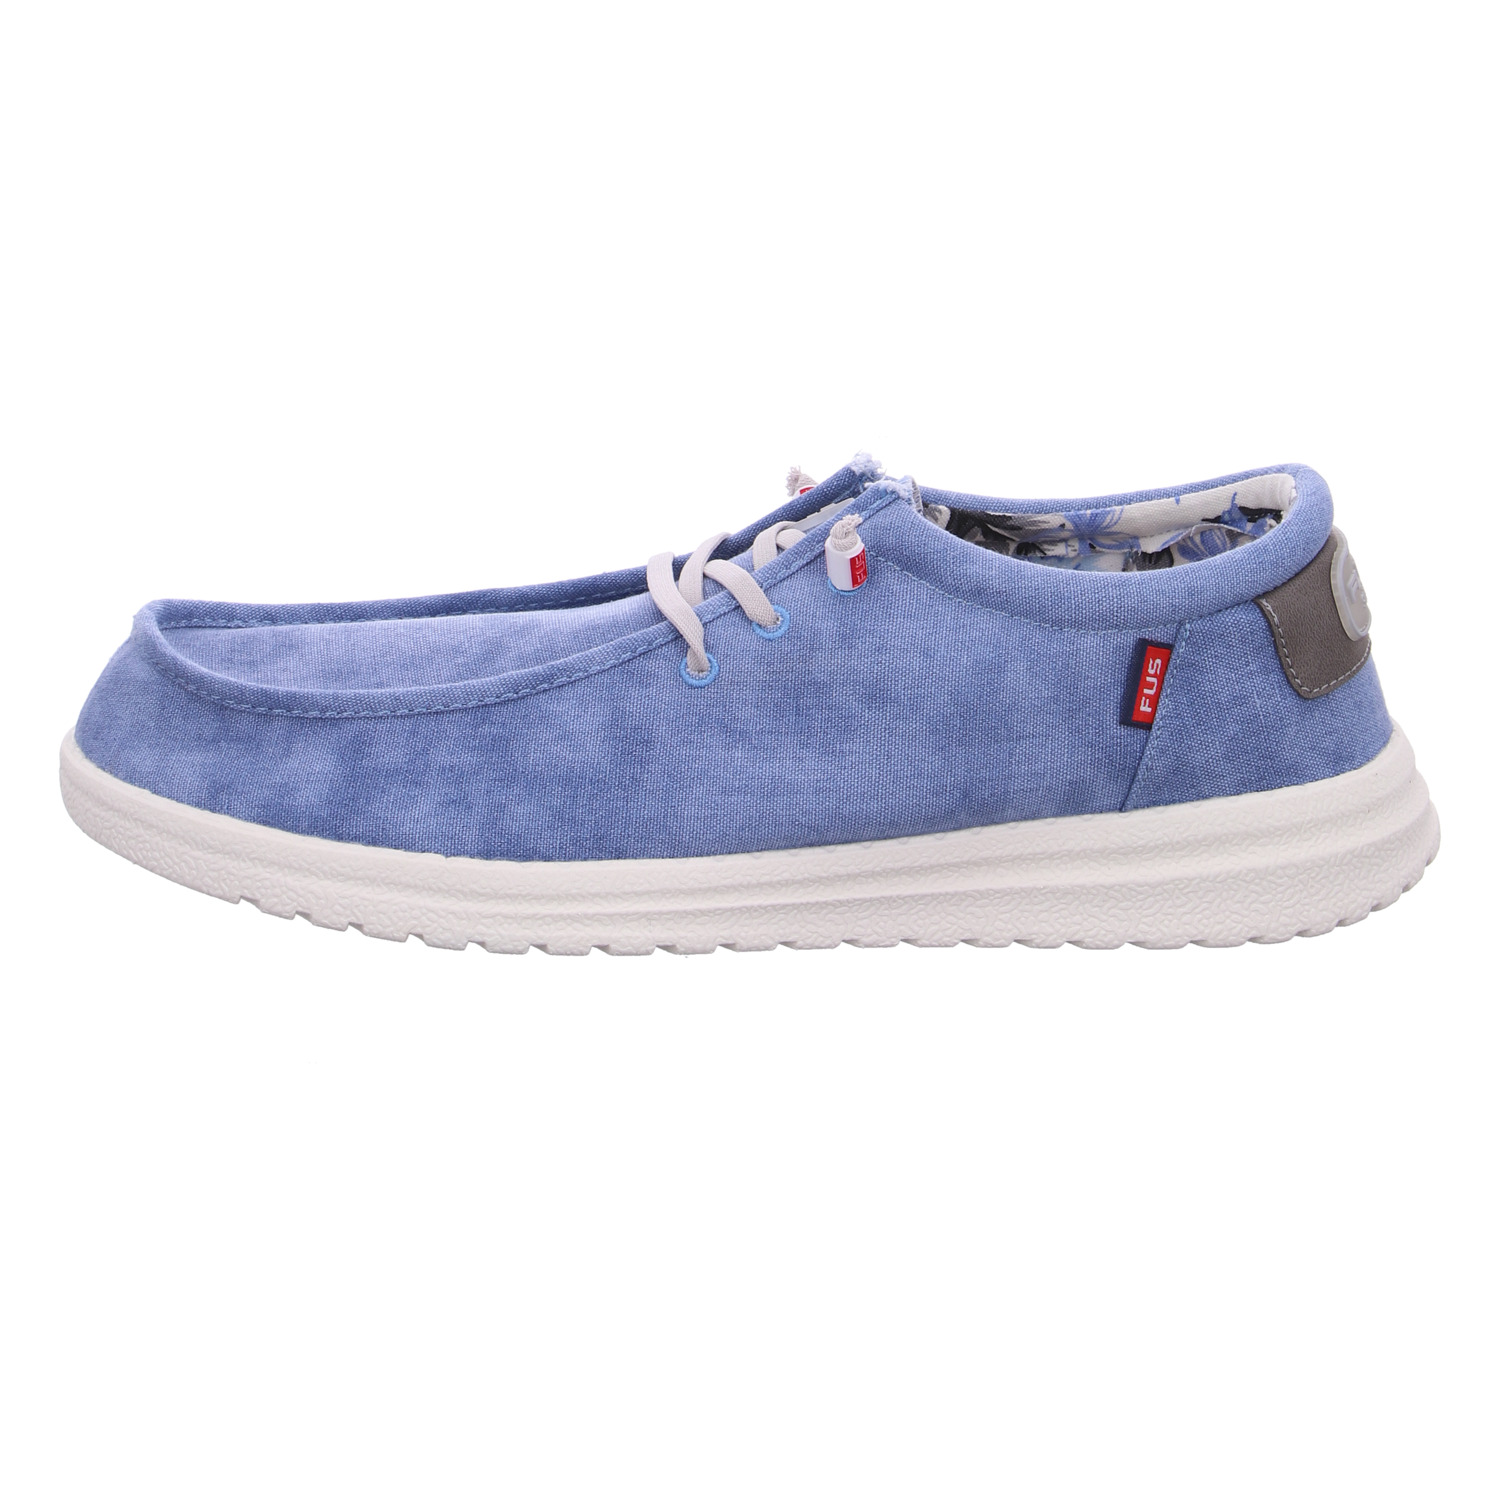 fusion-sneaker-blau-126047-40